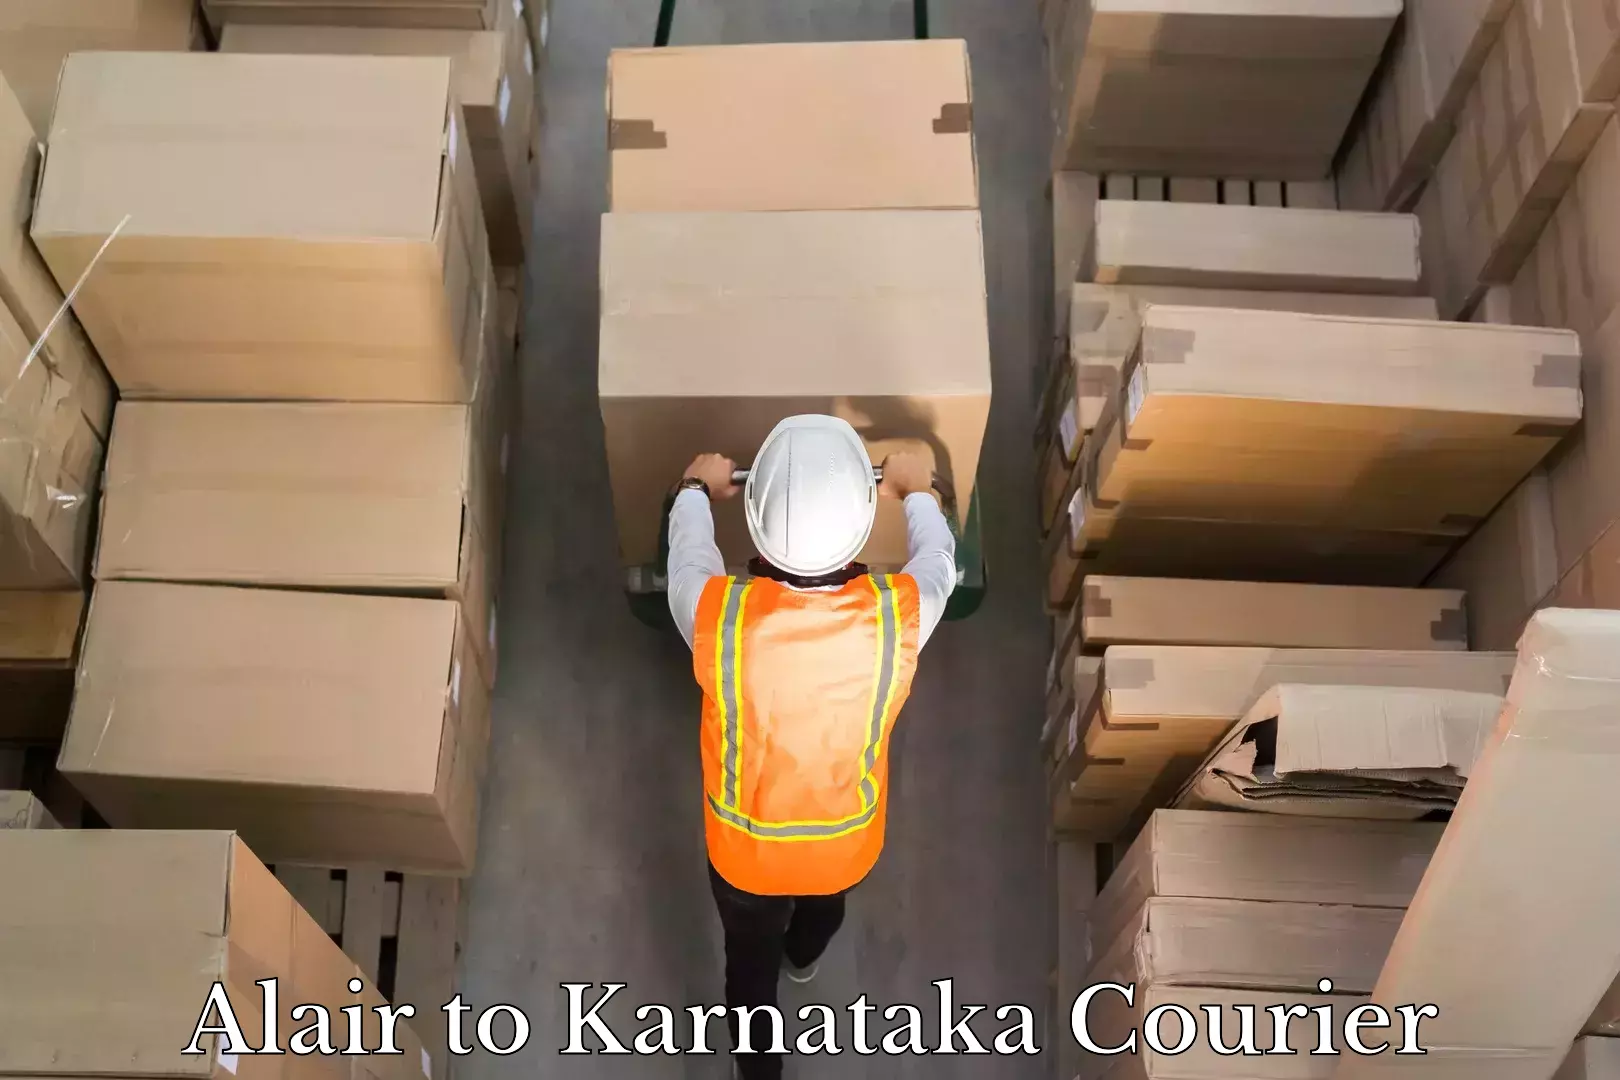 Premium courier solutions Alair to Karnataka